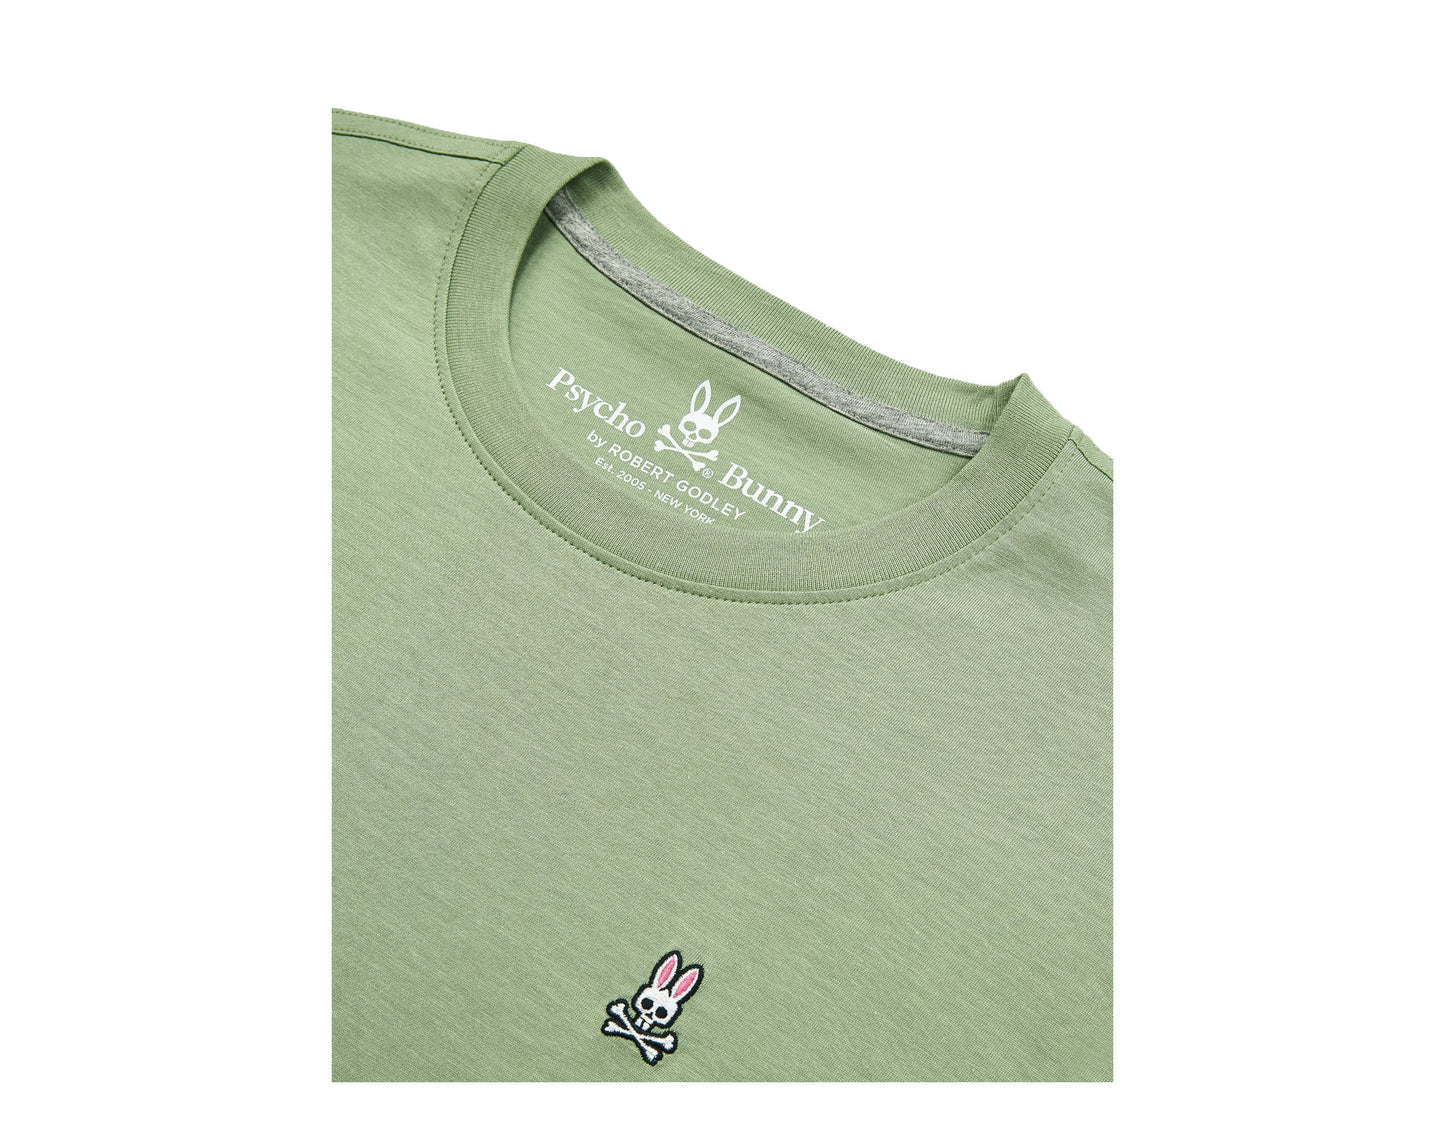 Psycho Bunny Classic Crew Neck Sage Green Men's Tee Shirt B6U014E1PC-SEG